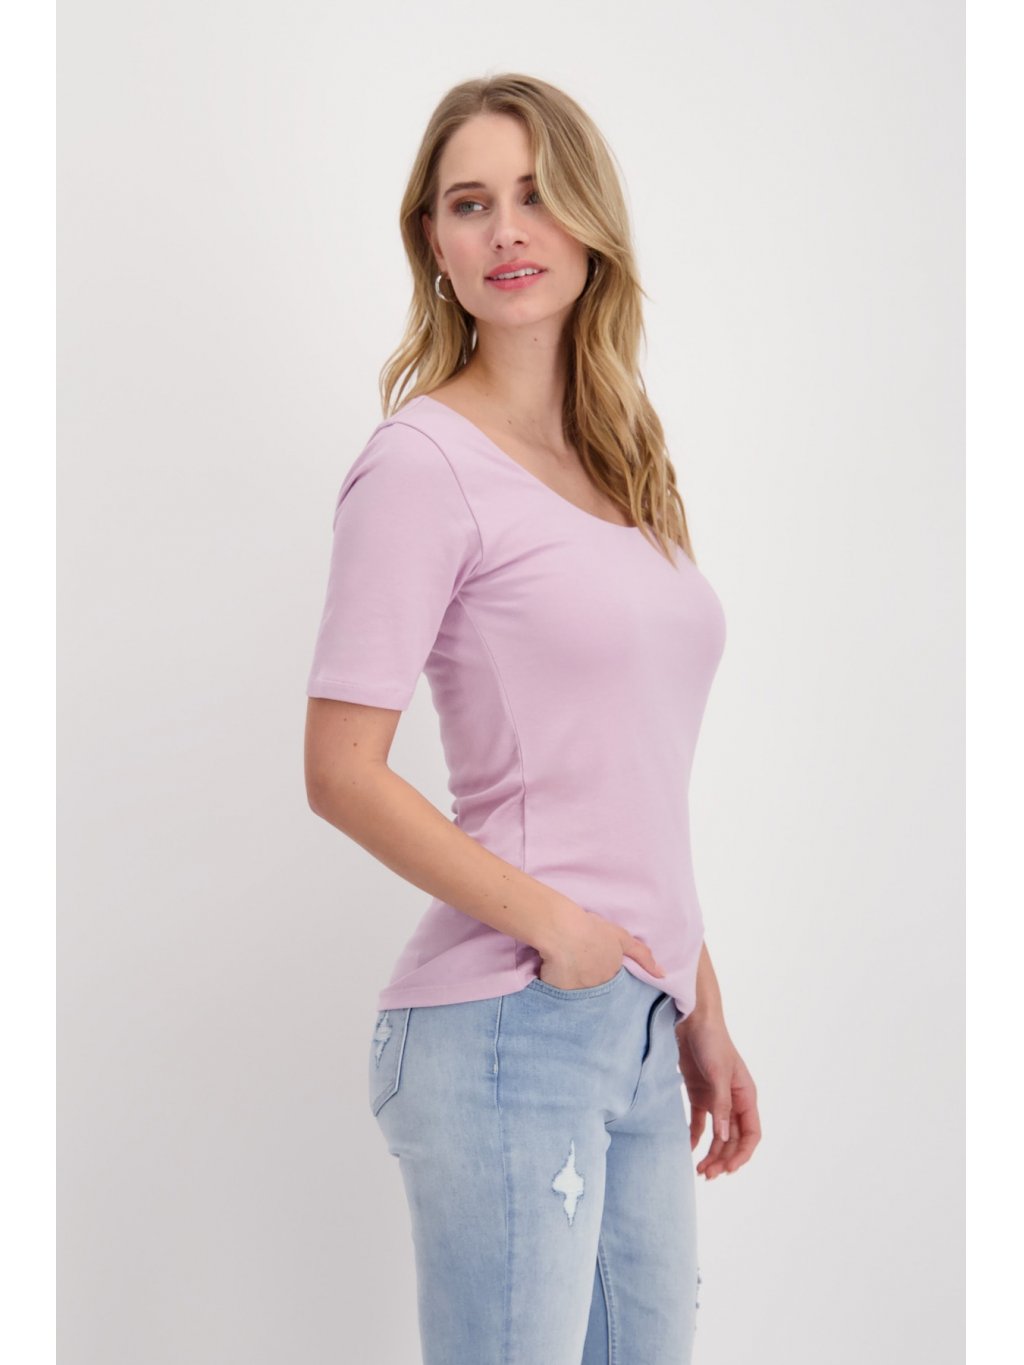 Tričko Monari 8372 lila basic s krátkým rukávem 